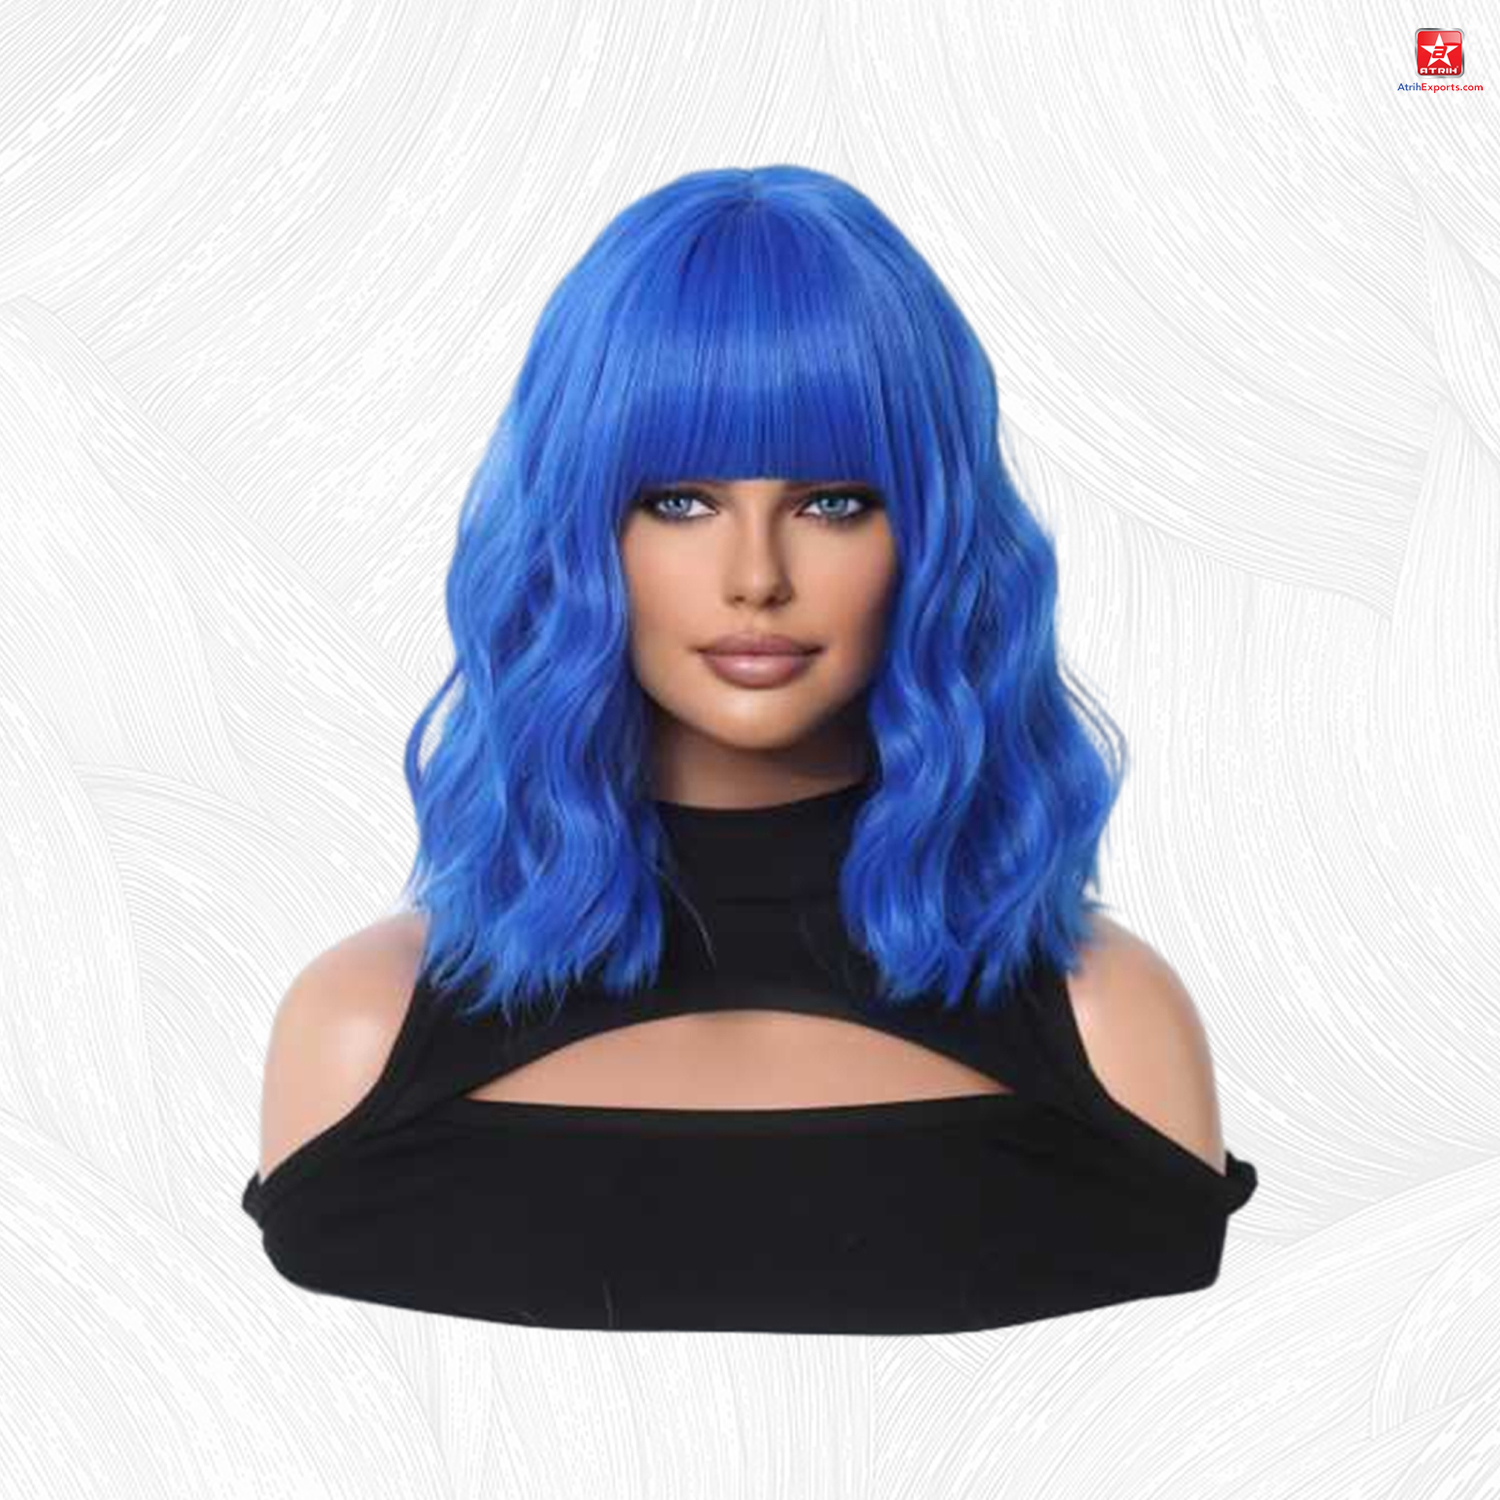 ATRIH EXPORTS Women's Treasure Blue Short Curly Wig